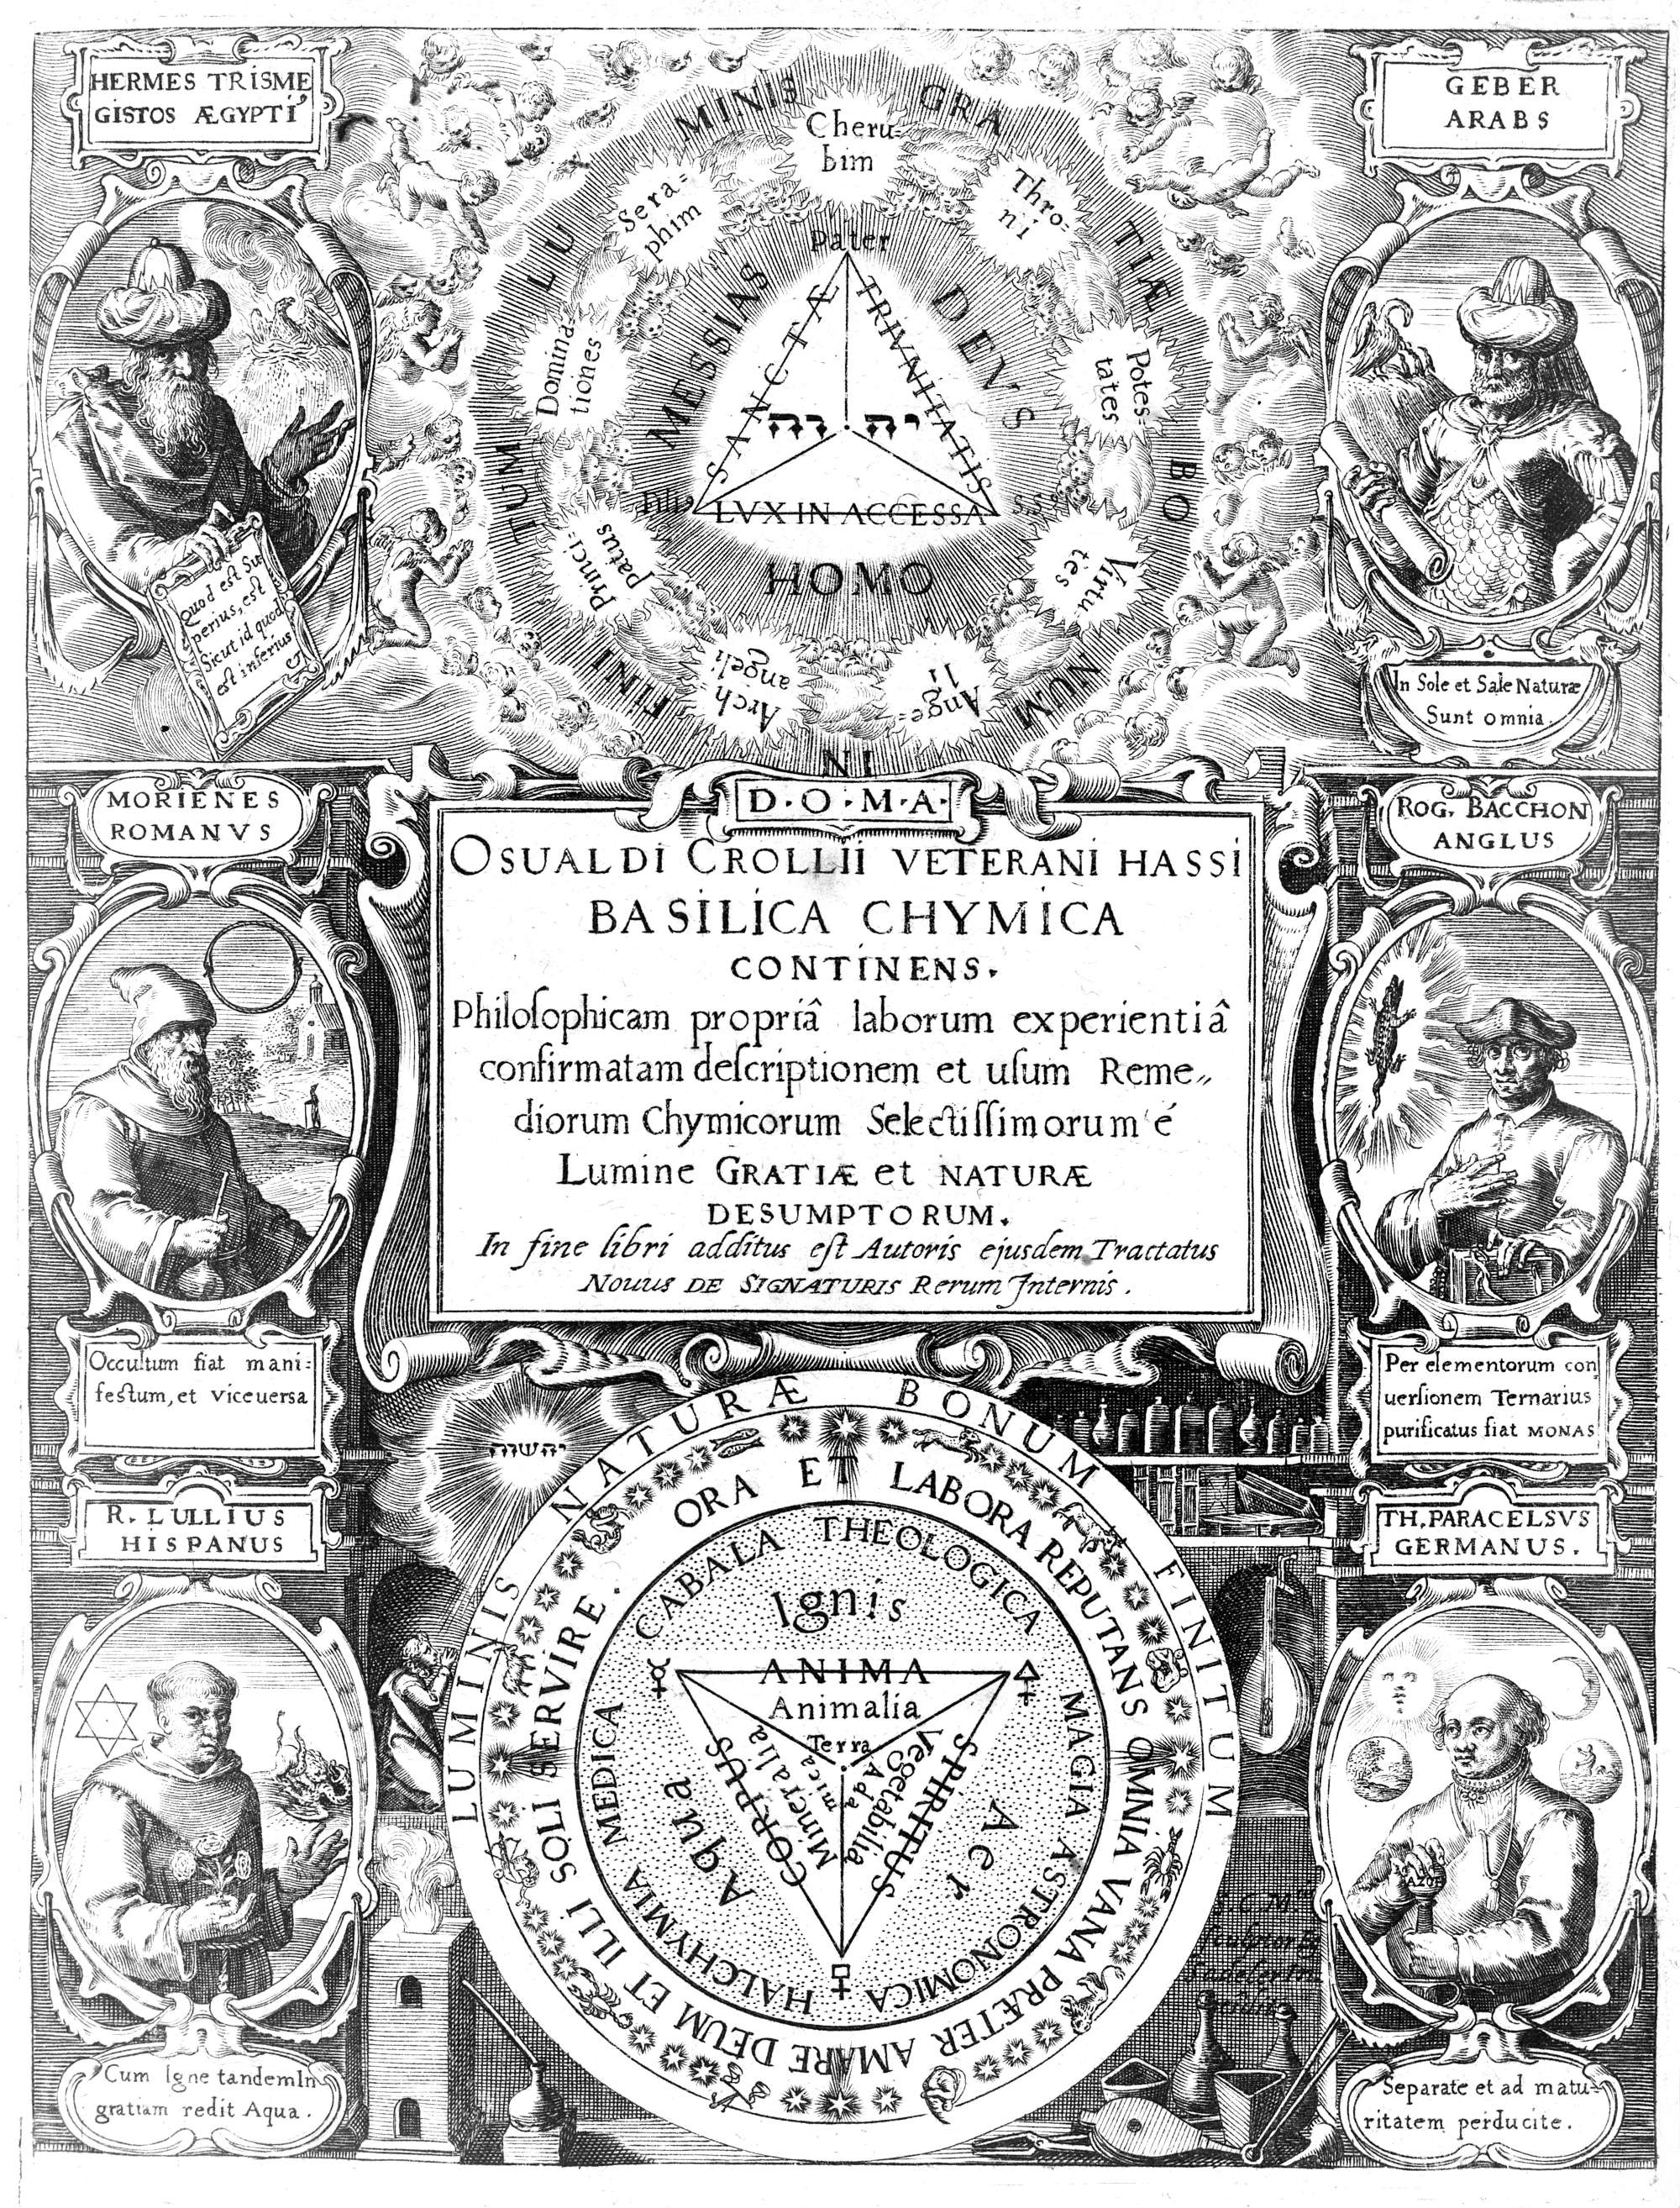 6. Oswald Croll, Basilica chymica (1608)